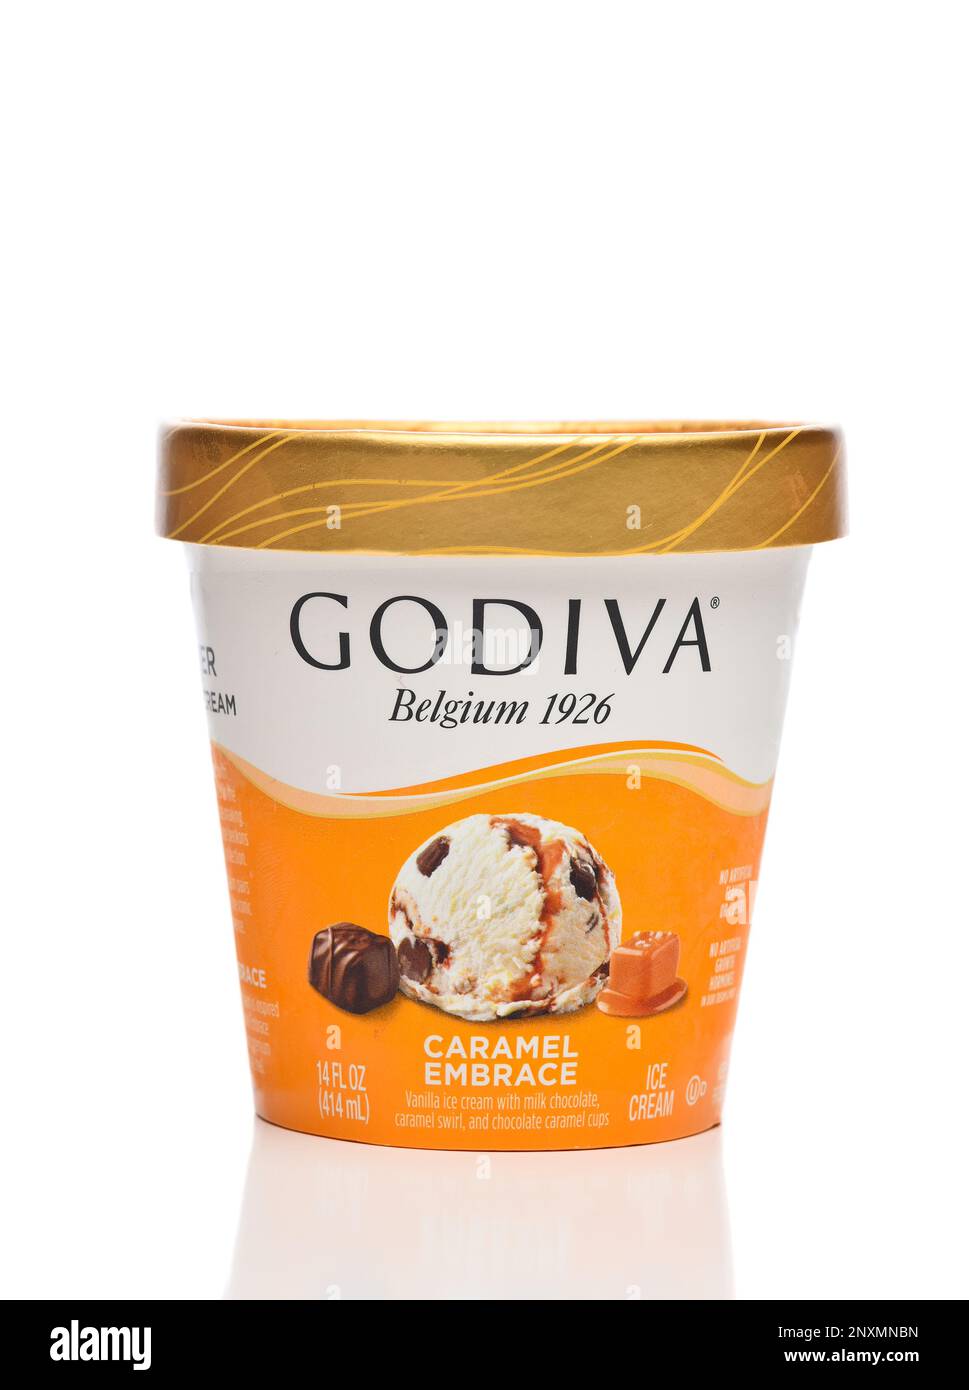 IRIVNE, CALIFORNIA - 01 MAR 2023: A Carton of Godiva Caramel Embrace ice cream. Stock Photo